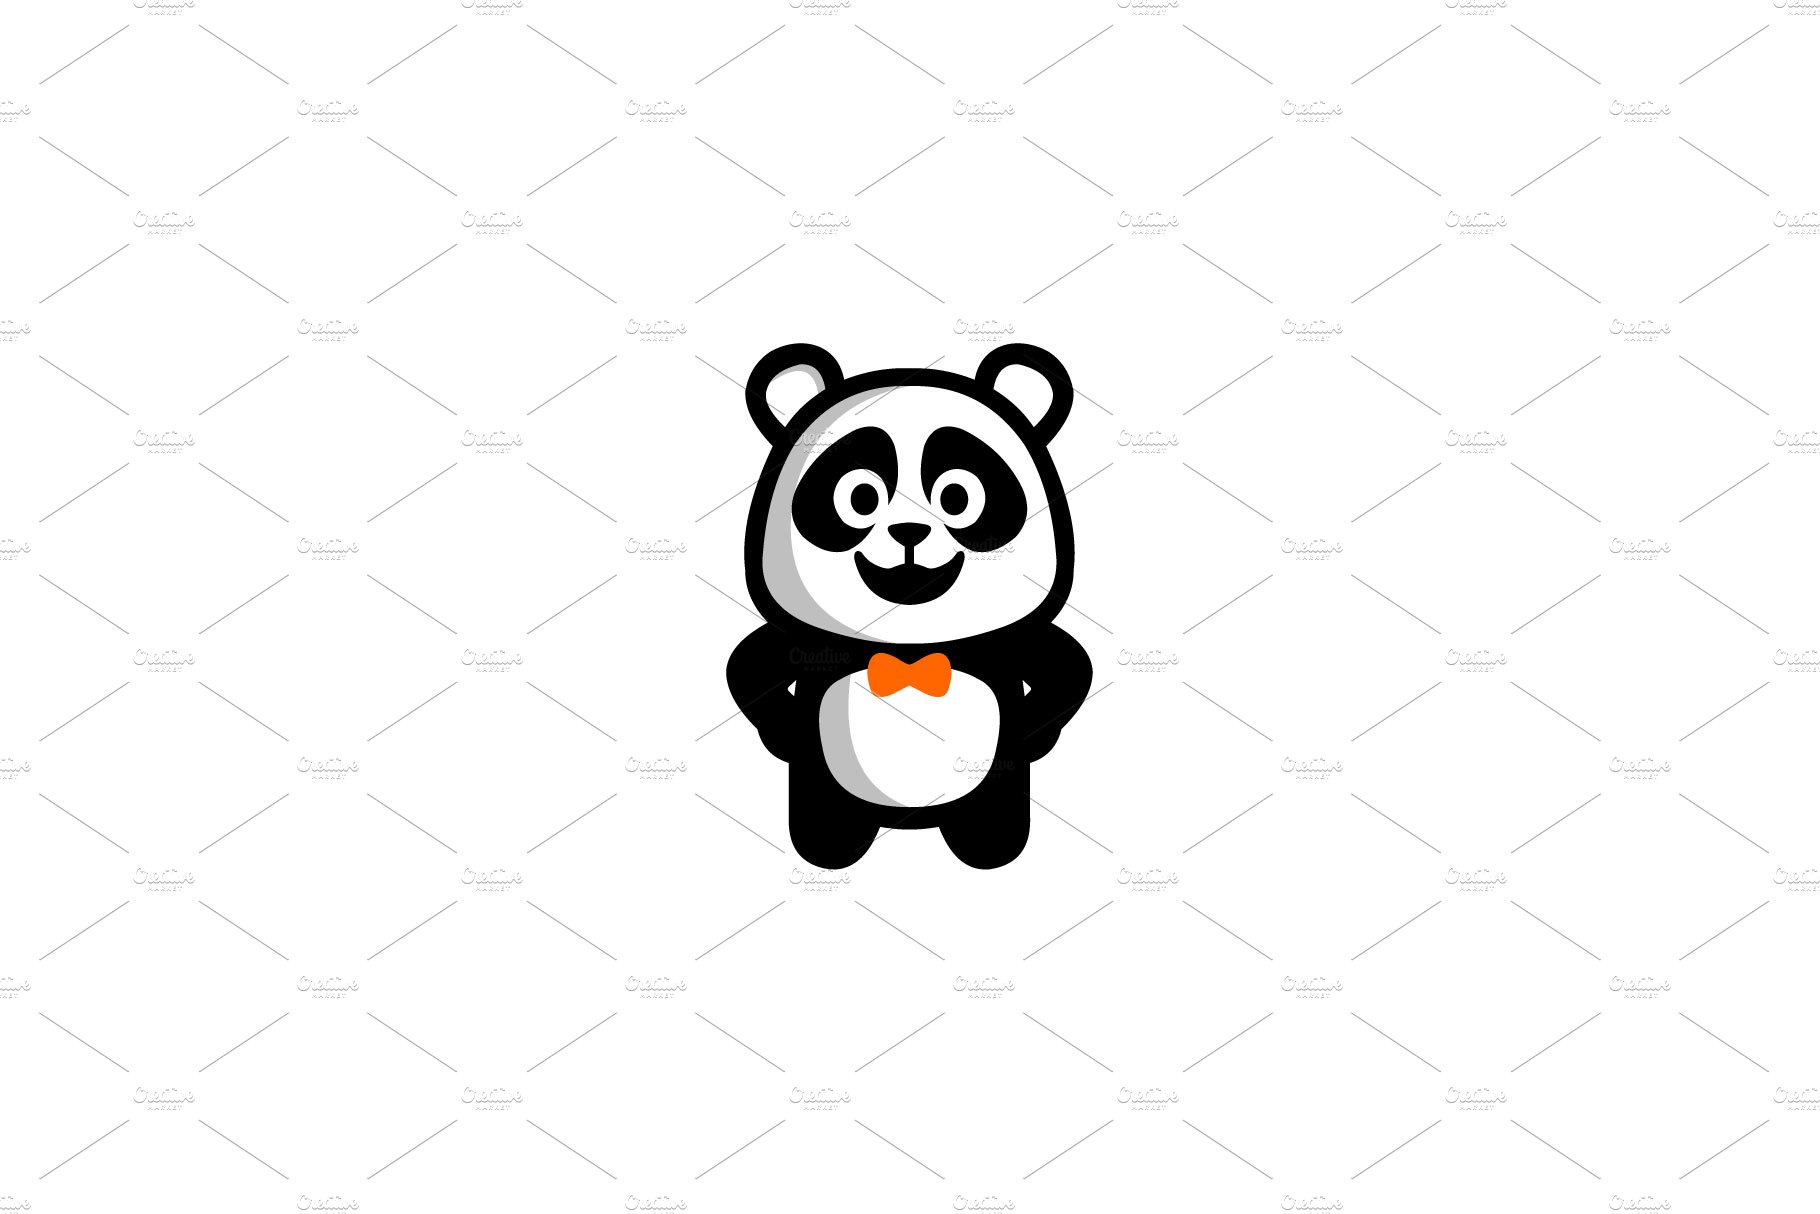 Panda logo vector animal design cover image.